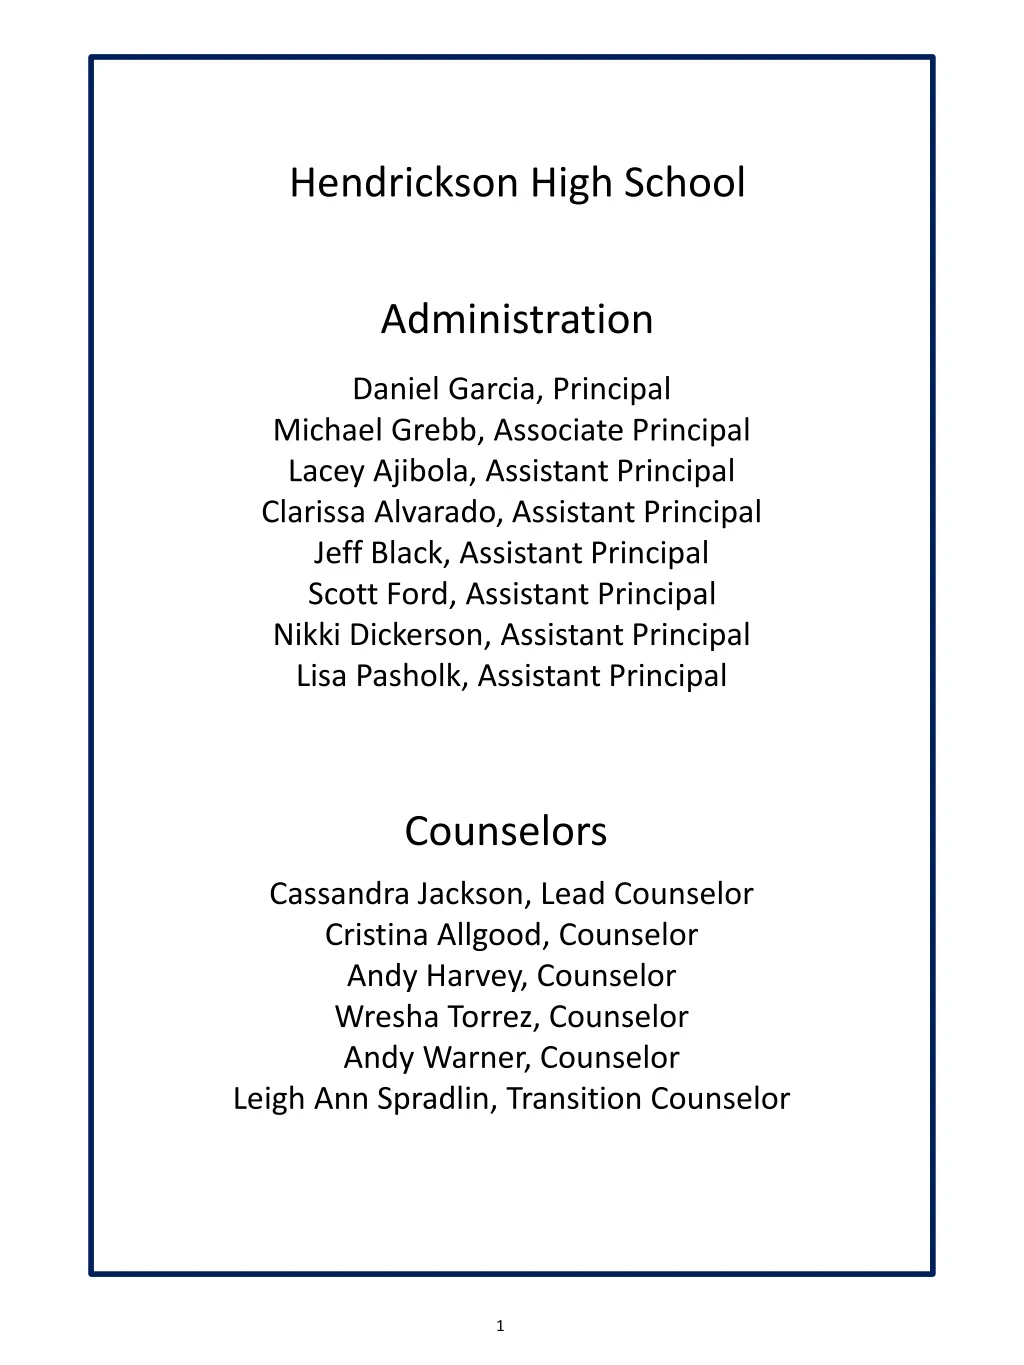 hendrickson high school